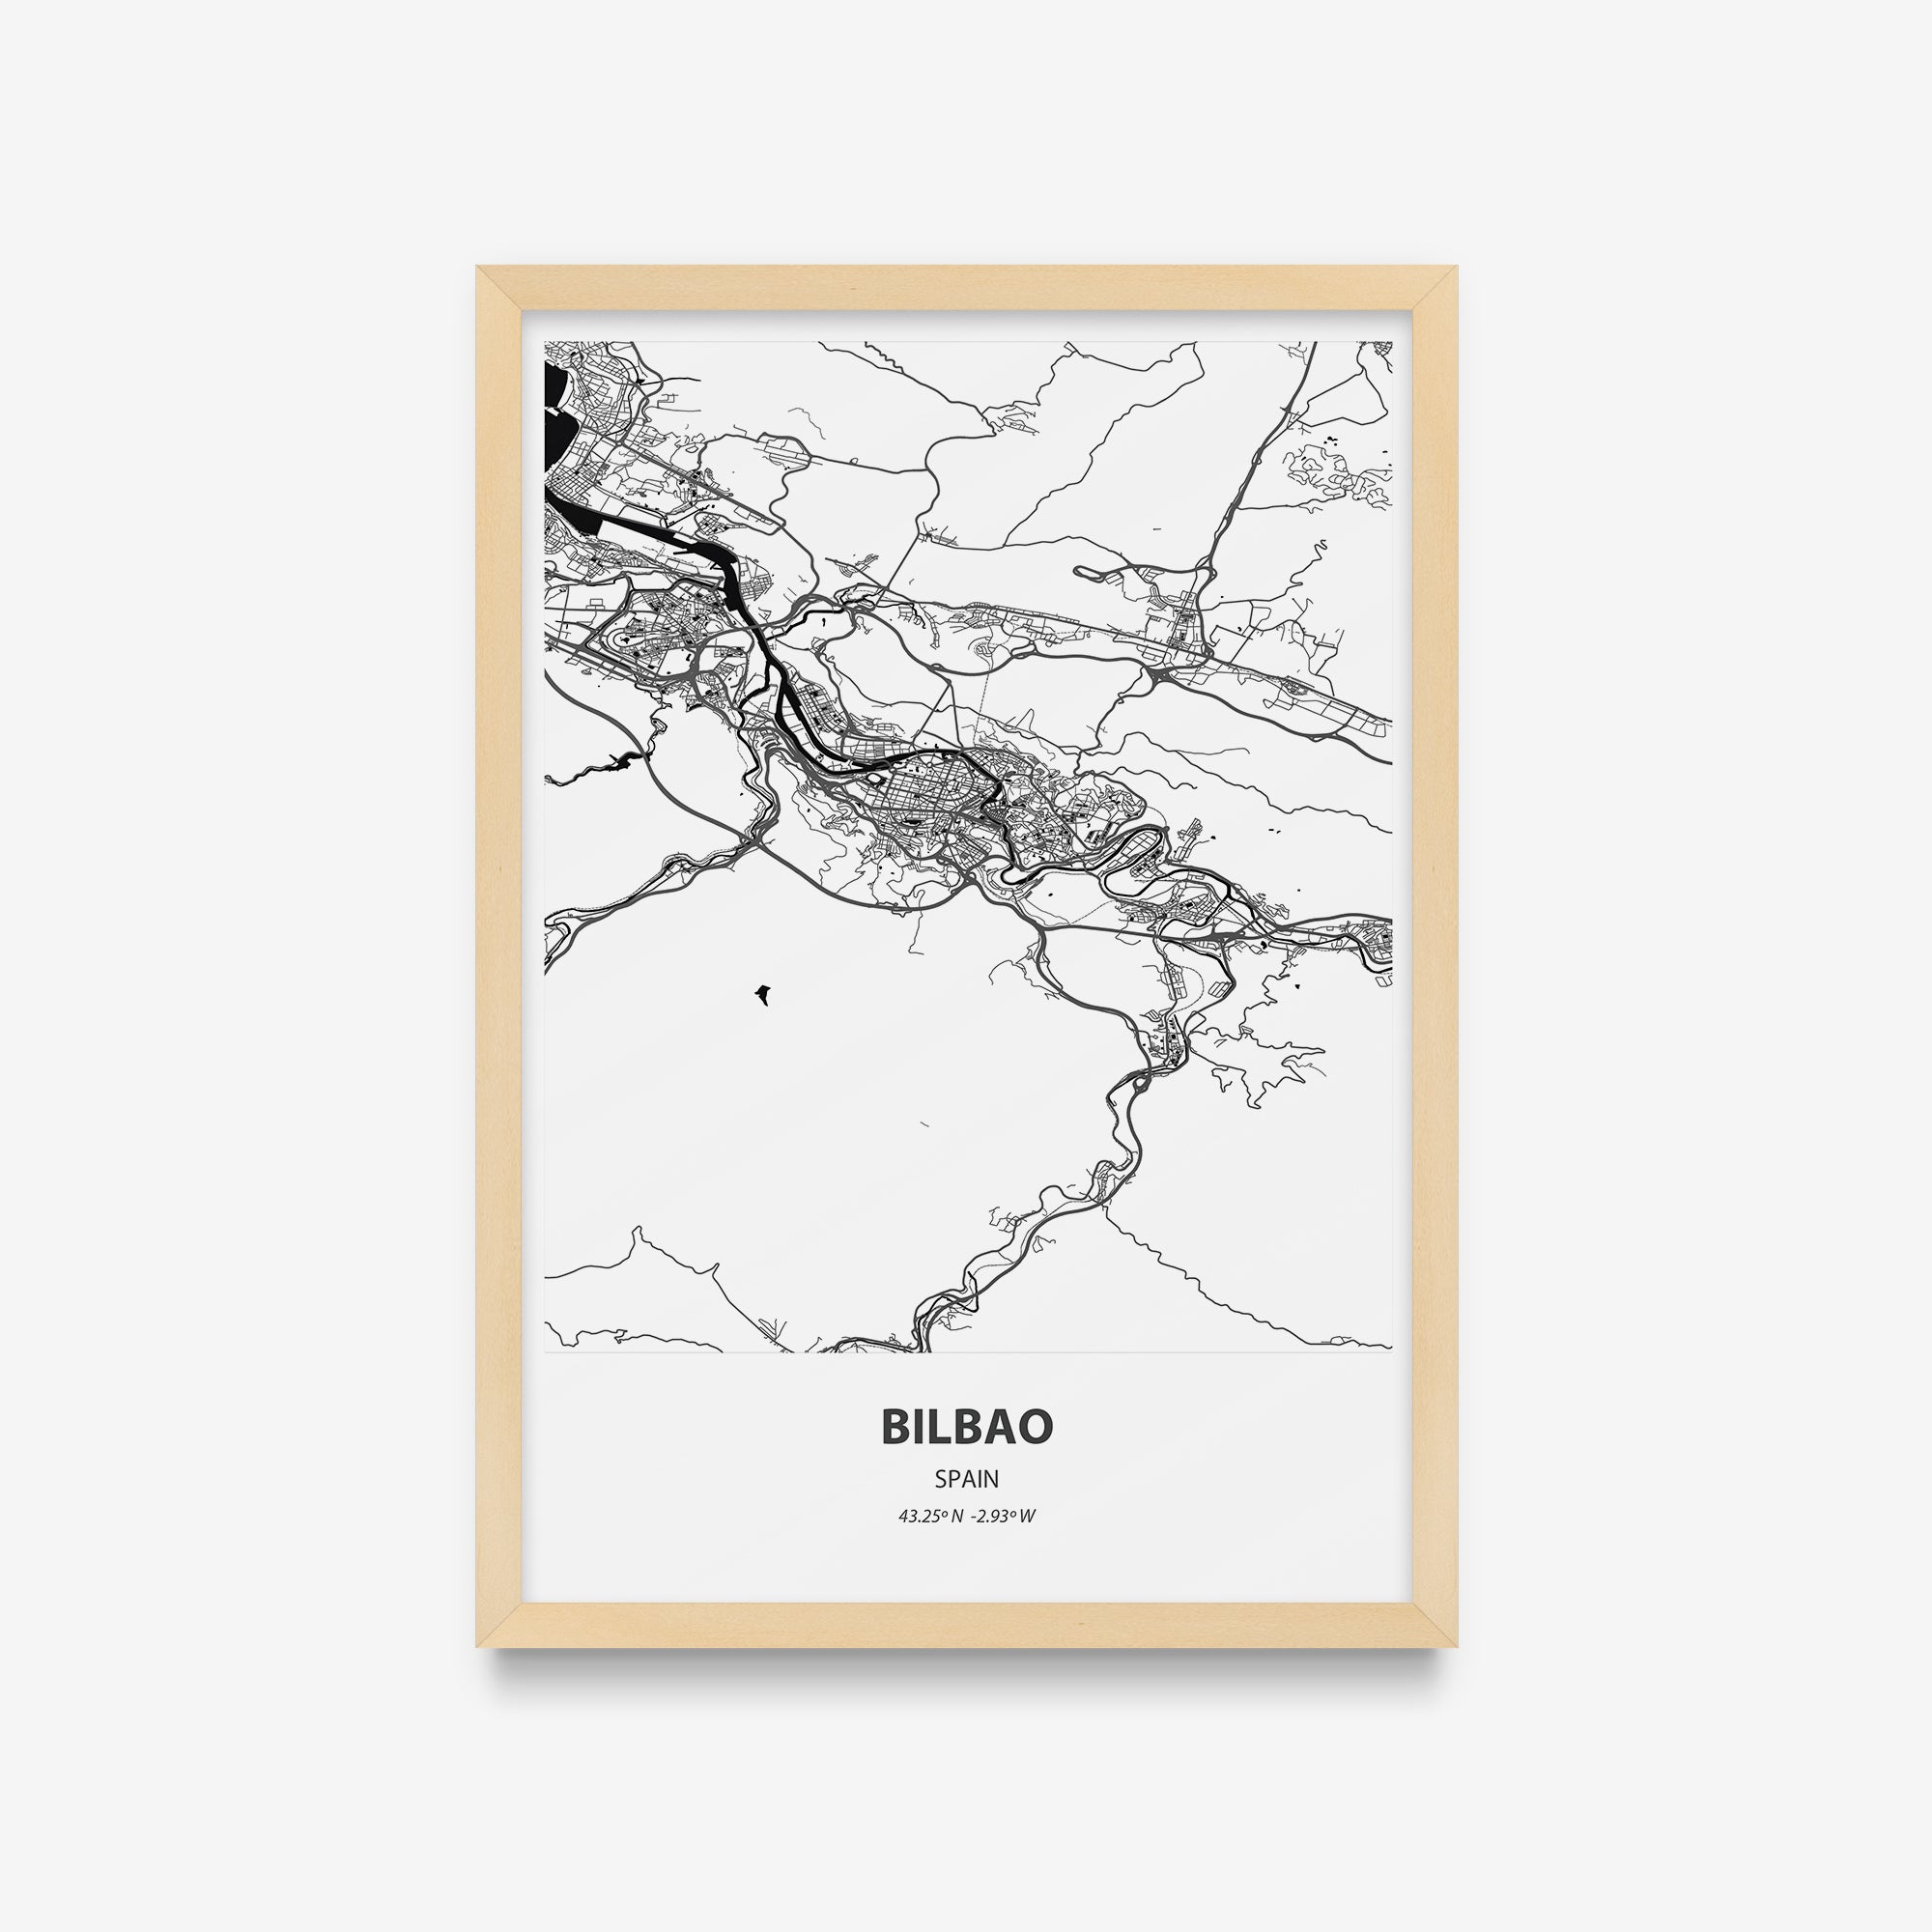 Mapas - Bilbao